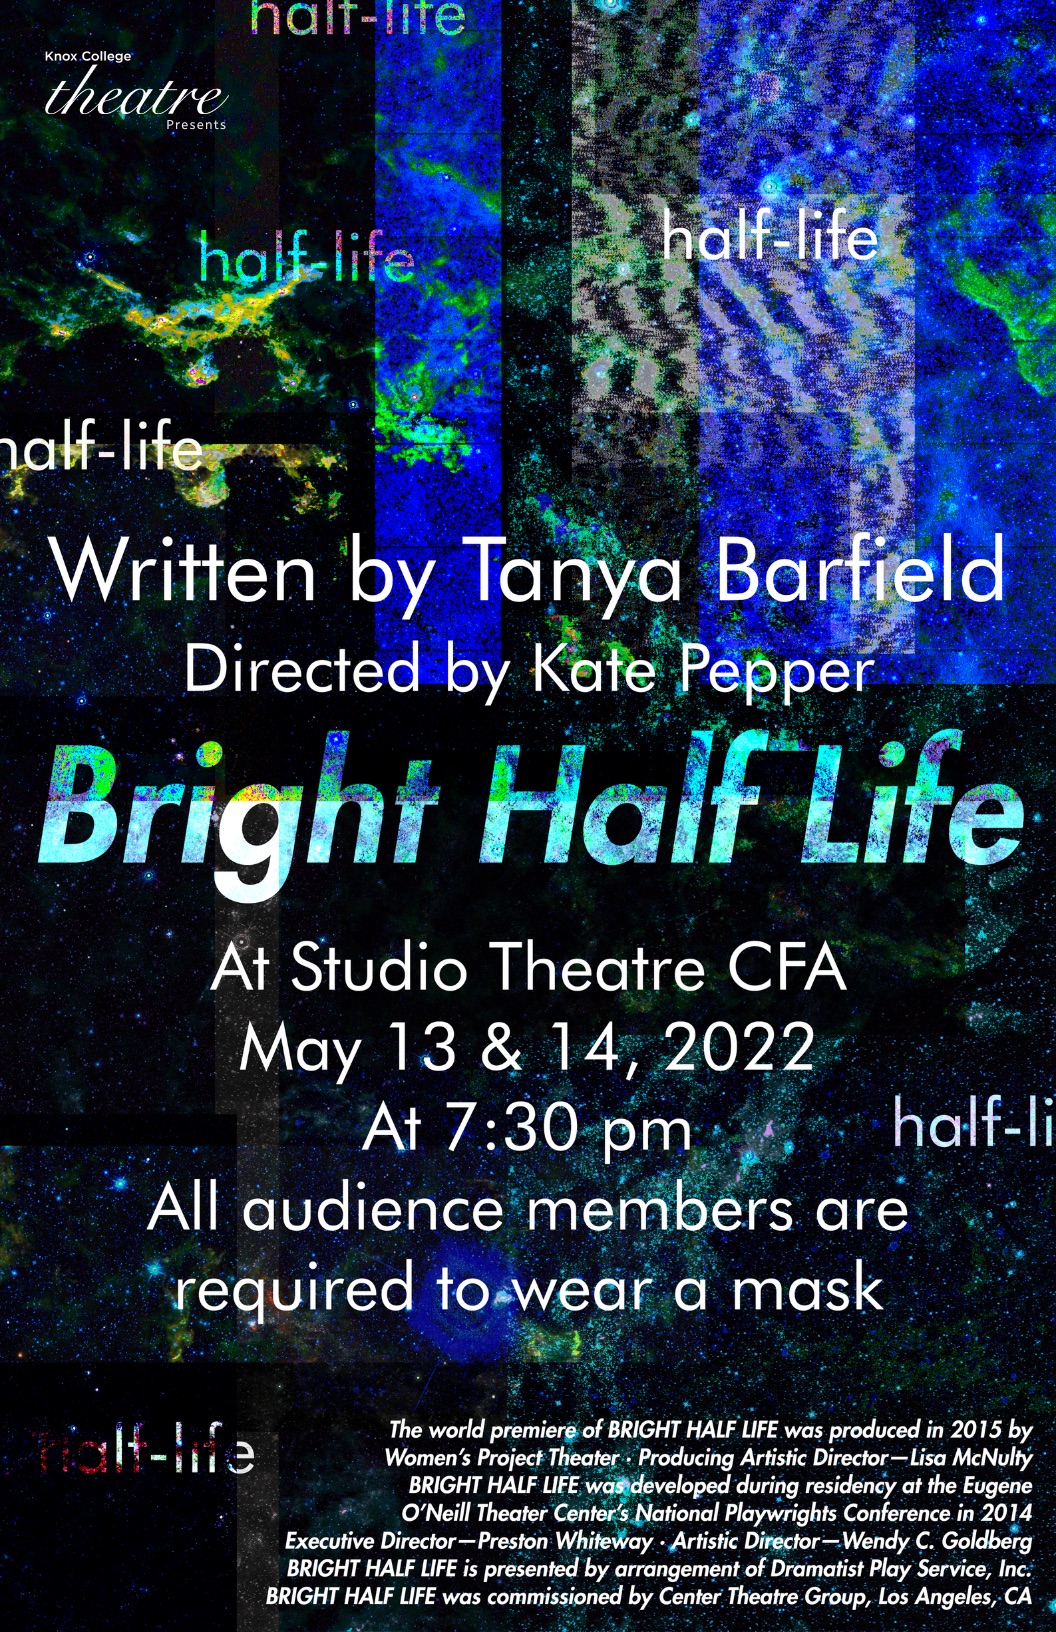 Bright Half Life